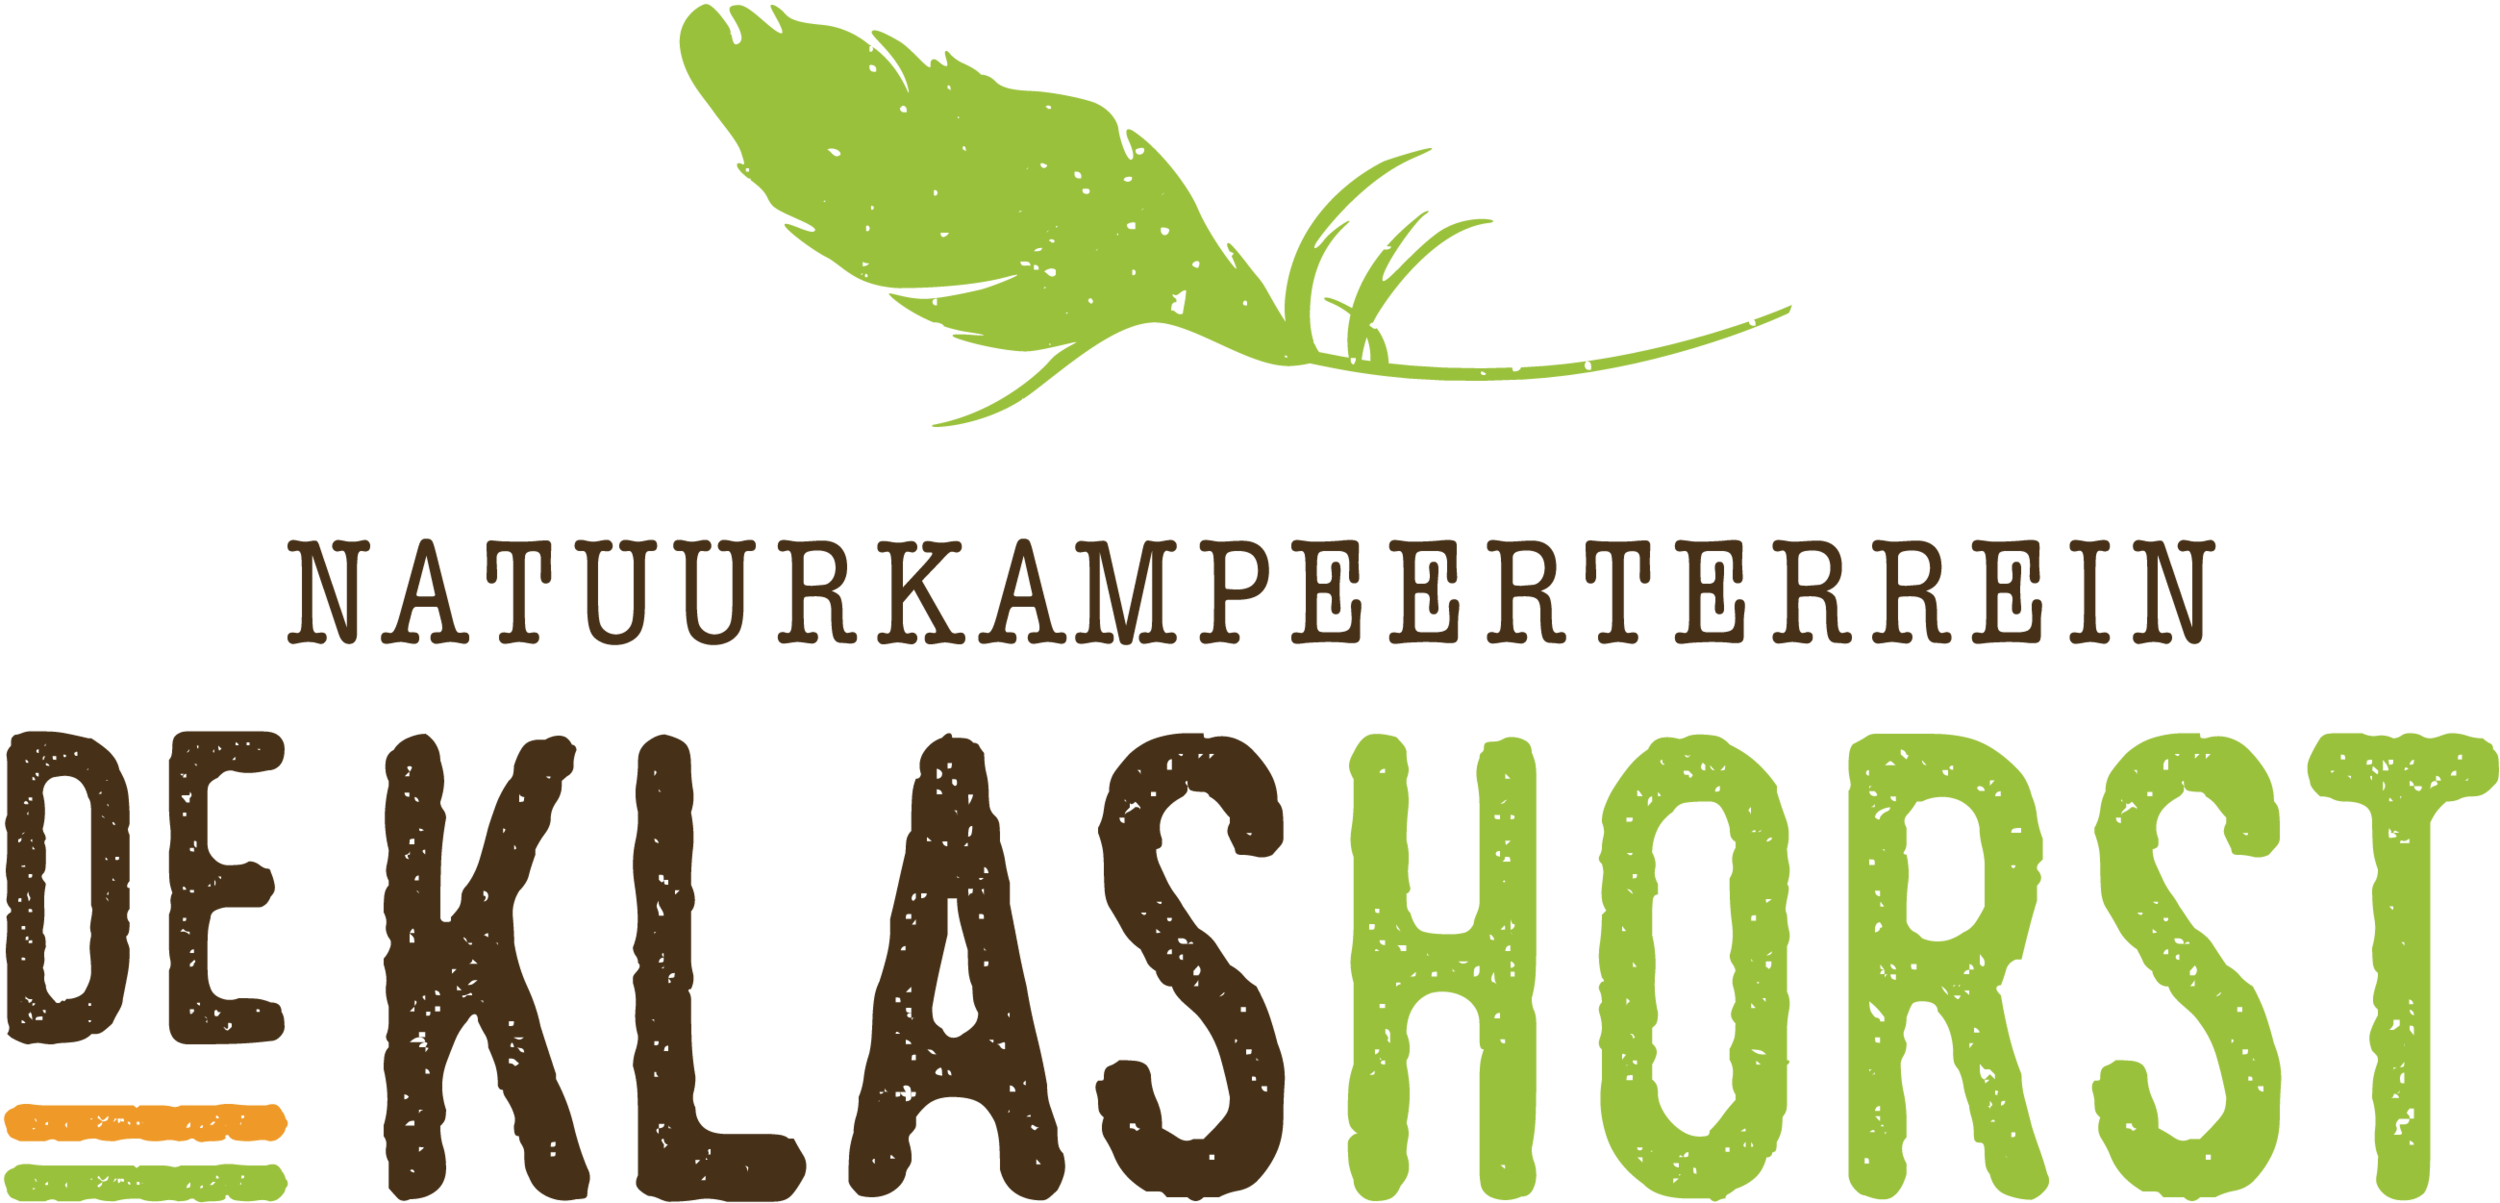 klashorst-logo.png